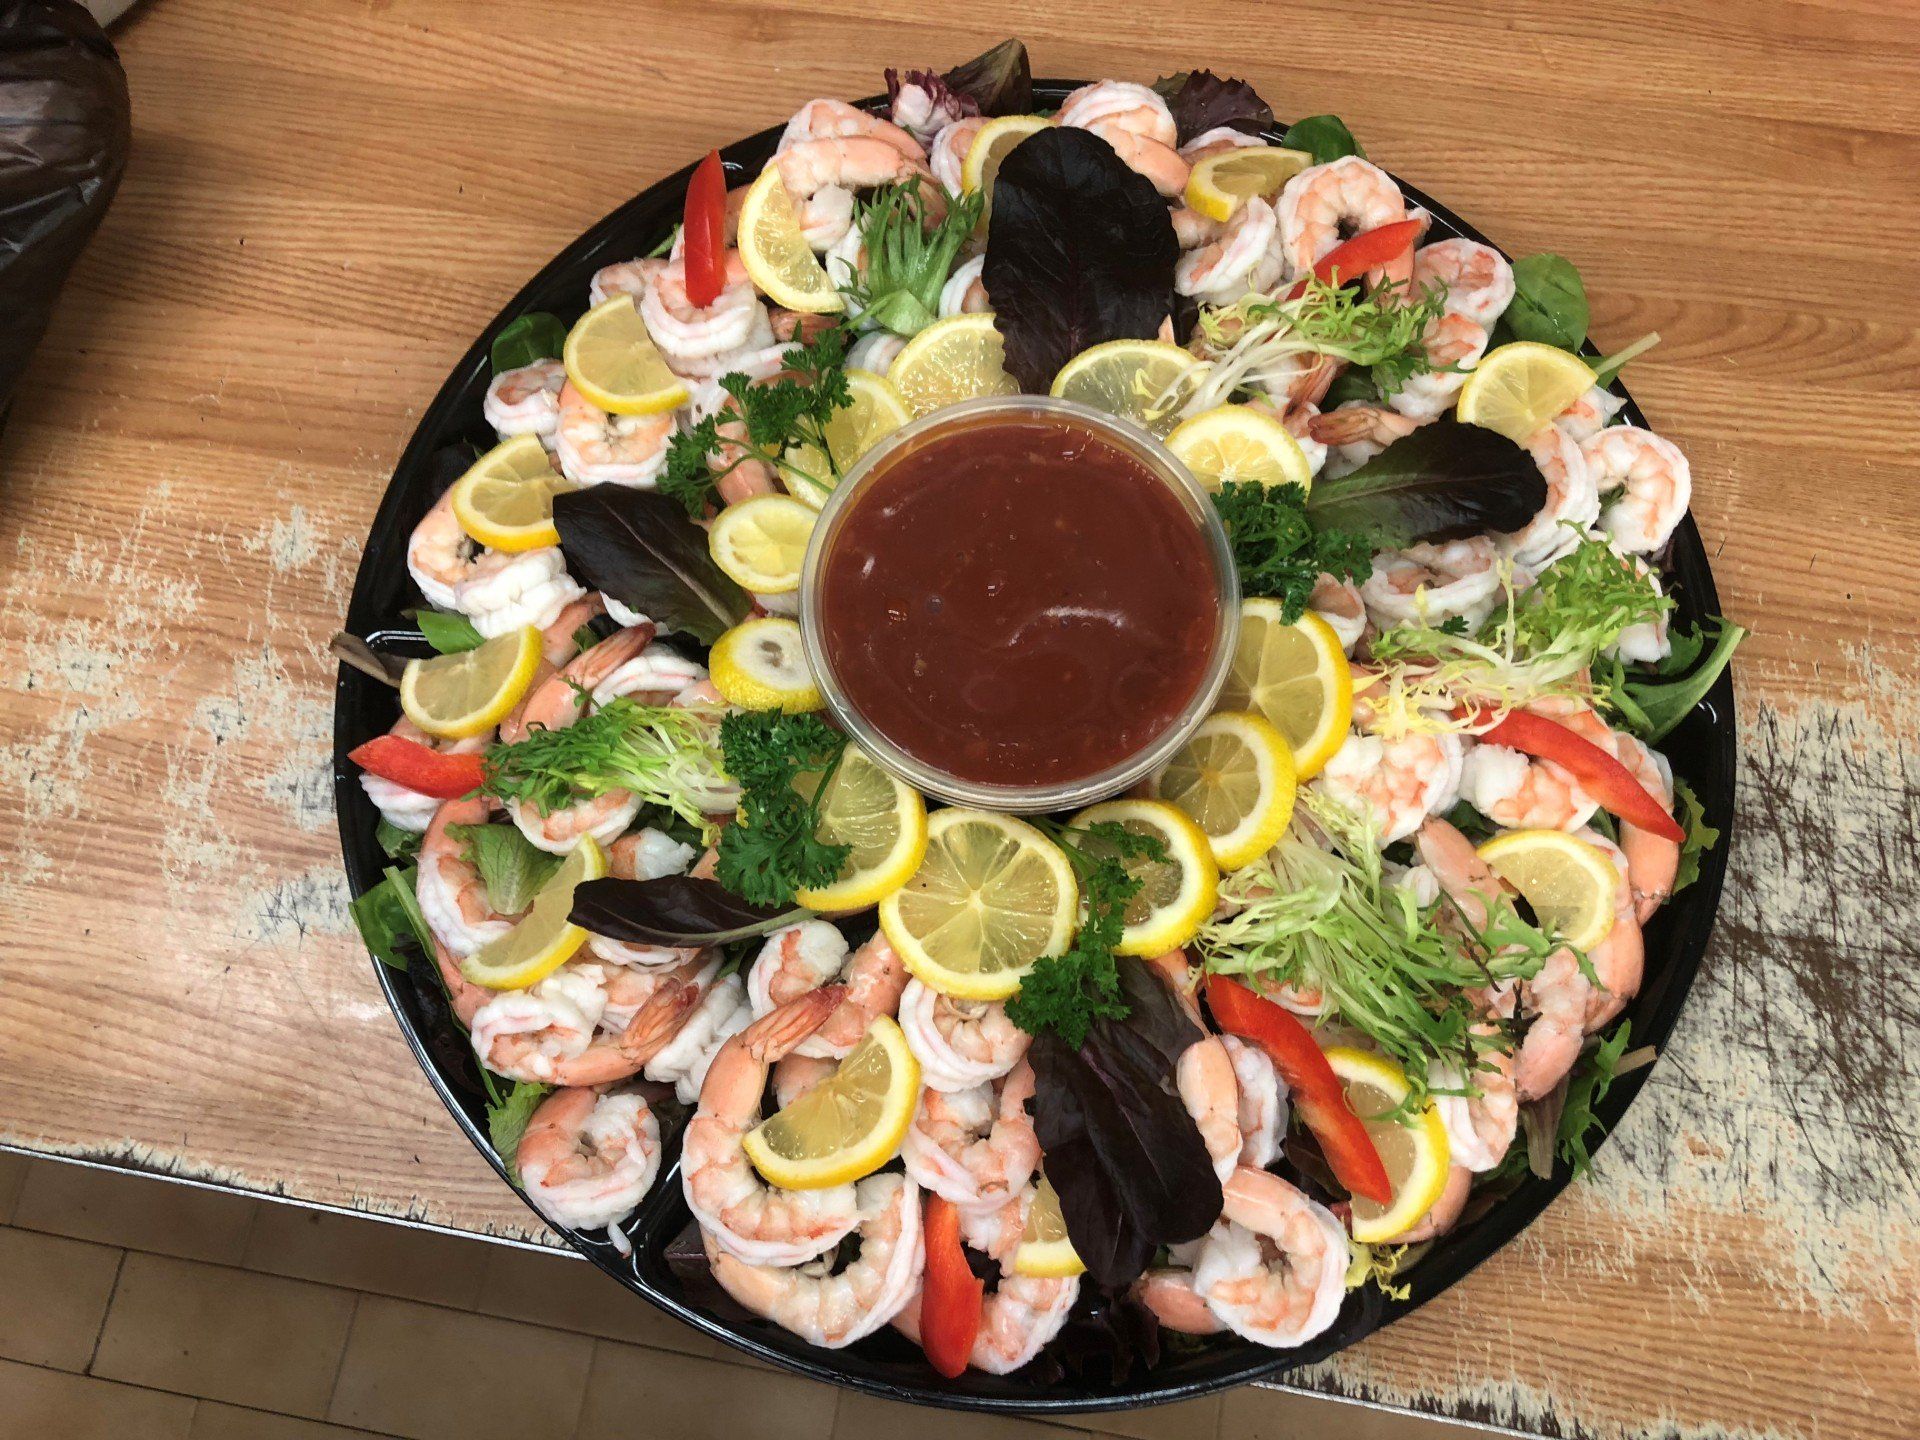 Shrimp salad with veggies